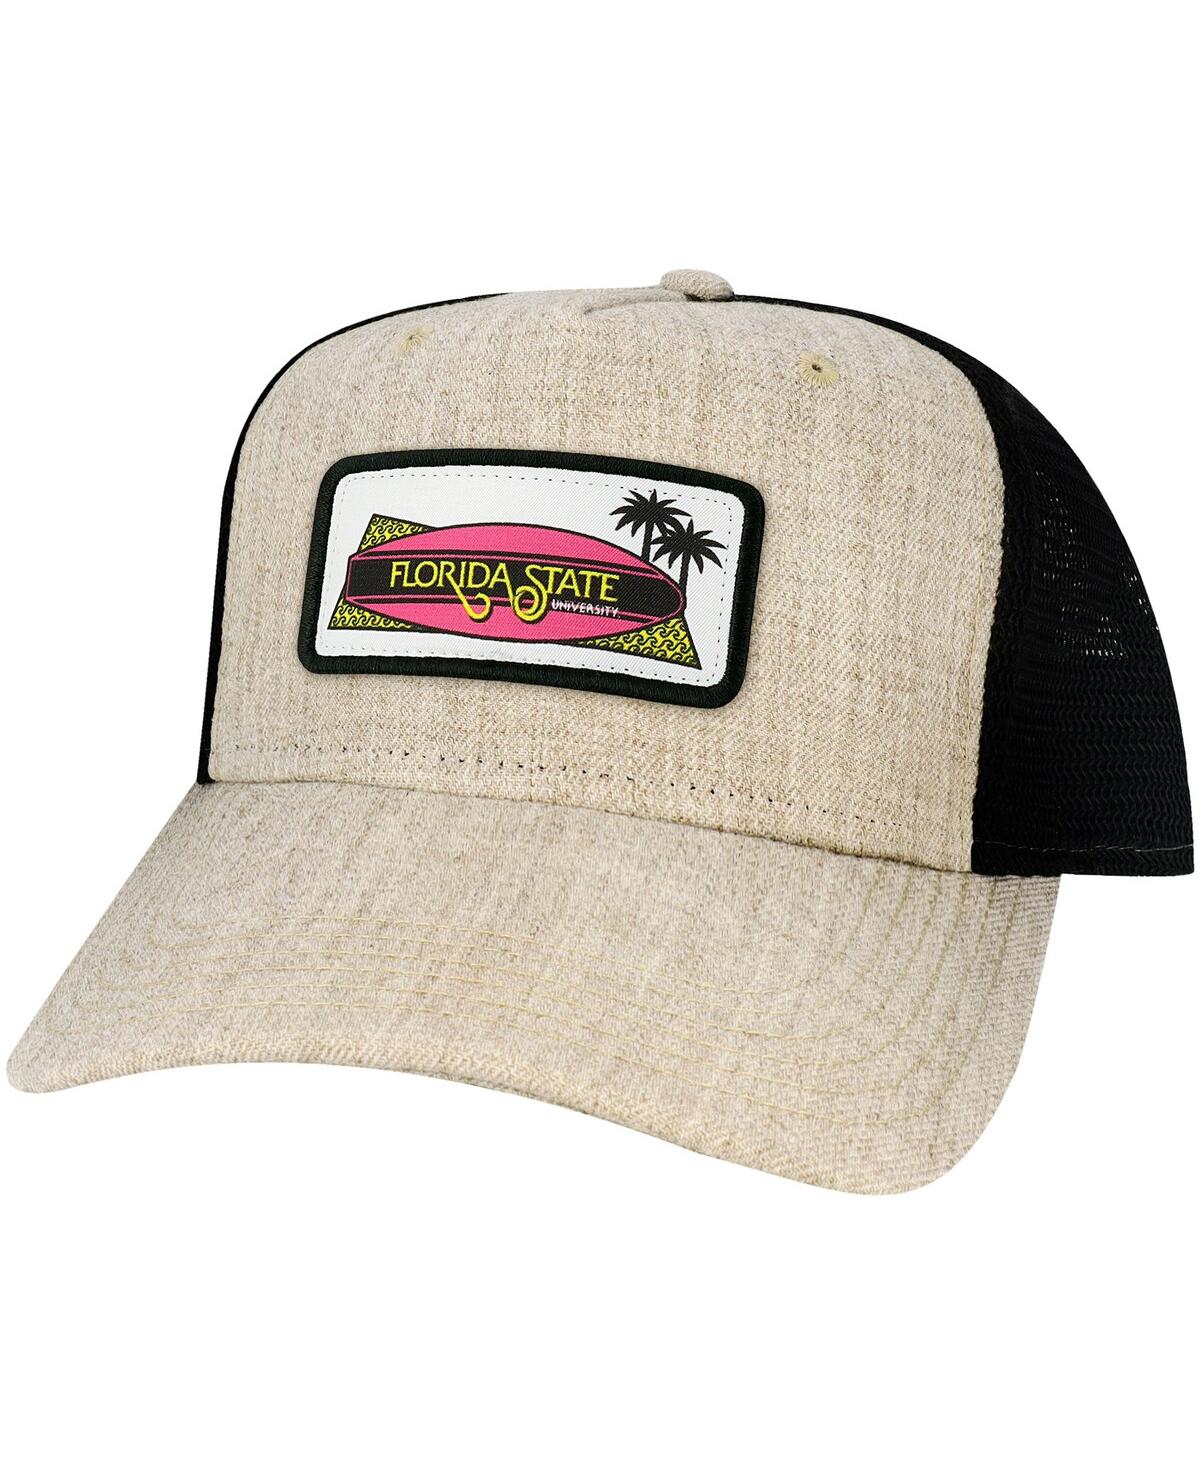 Men's League Collegiate Wear Tan Florida State Seminoles Beach Club Roadie Trucker Snapback Adjustable Hat - Tan